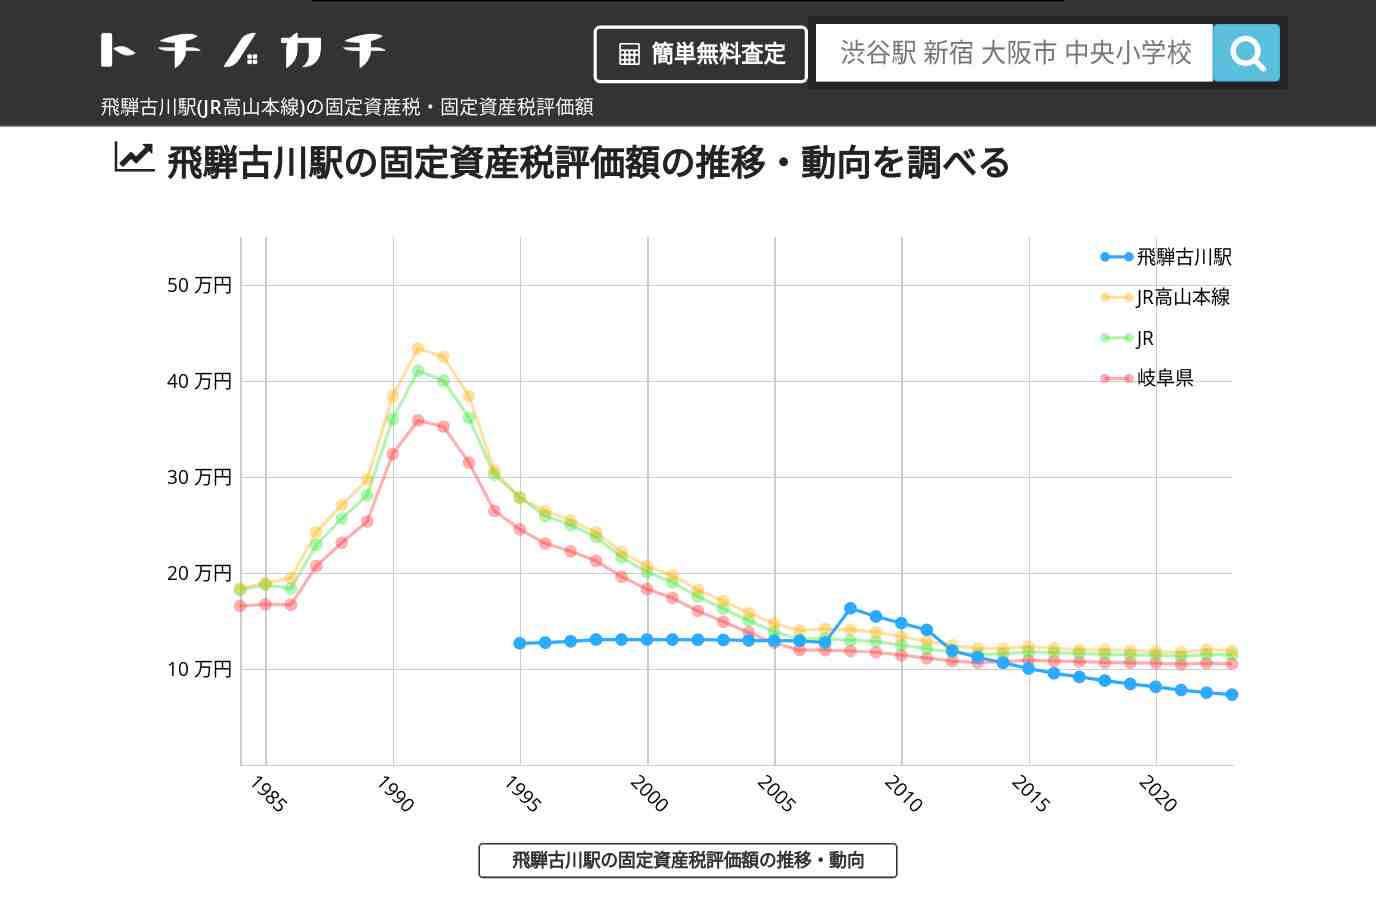 飛騨古川駅(JR高山本線)の固定資産税・固定資産税評価額 | トチノカチ